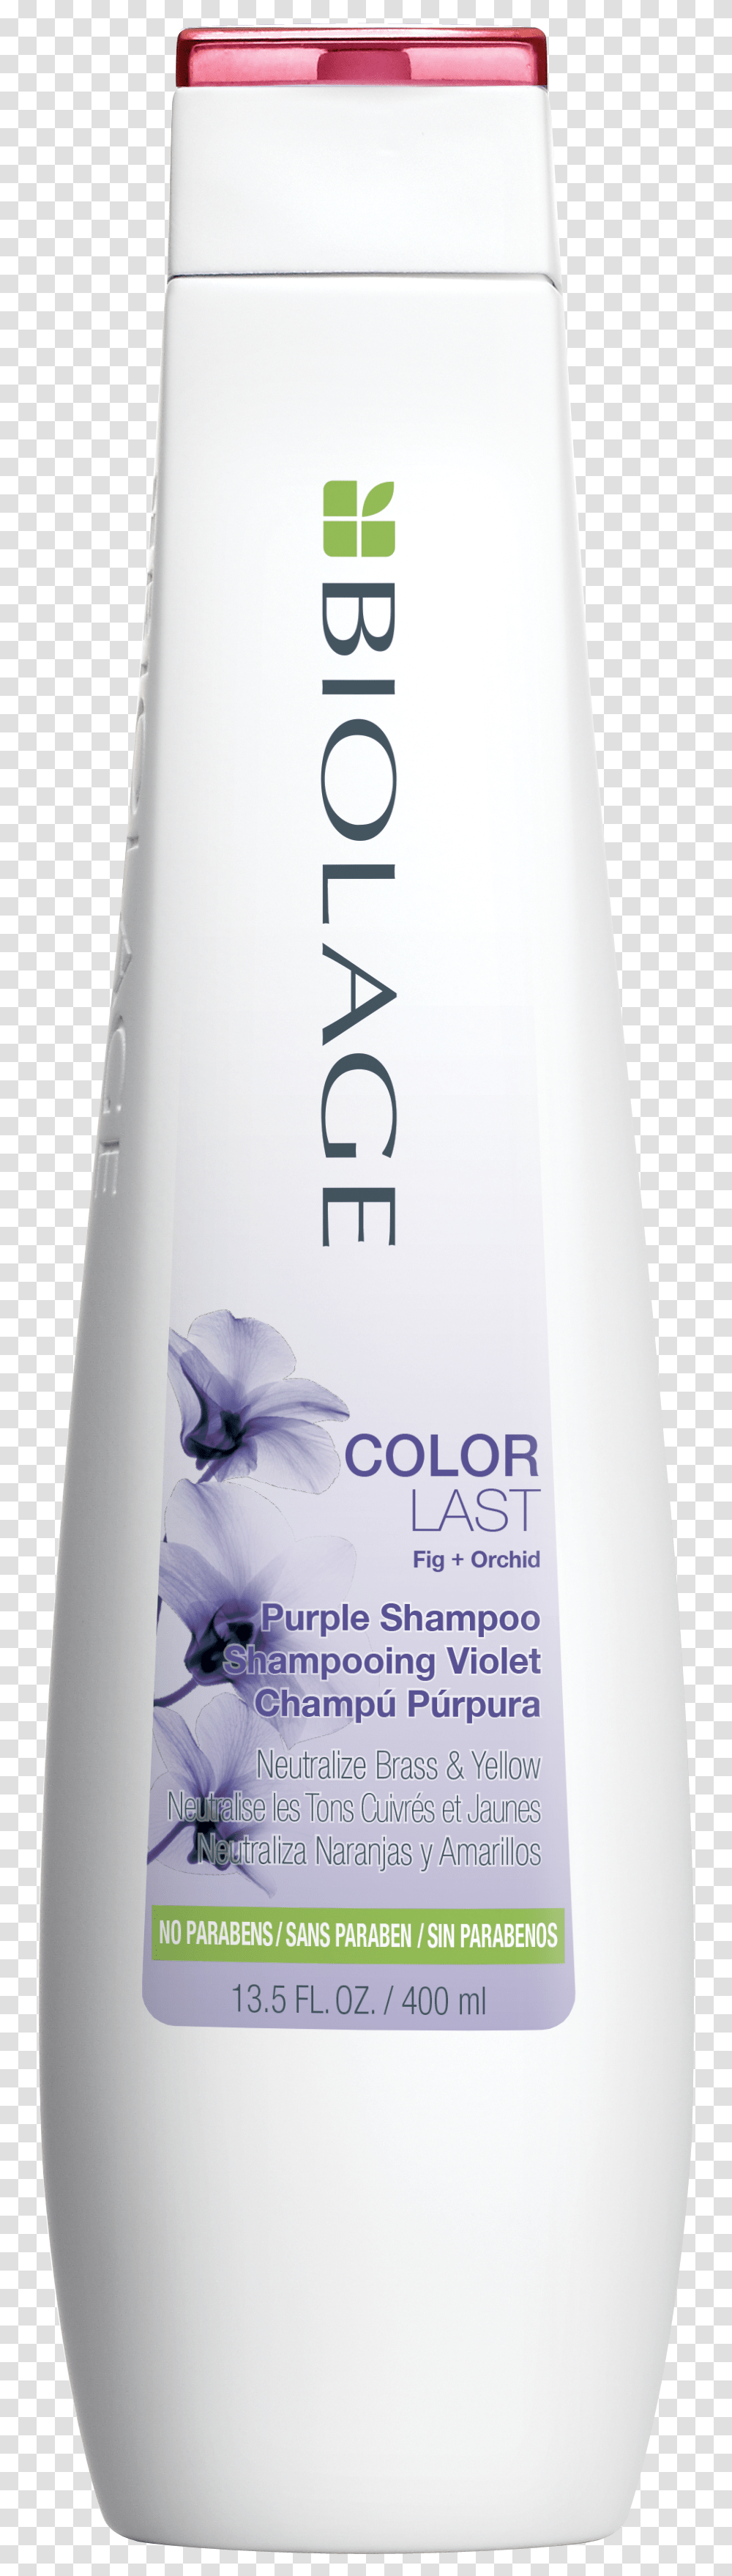 Biolage Tea Tree Shampoo, Bottle, Lotion, Cosmetics Transparent Png